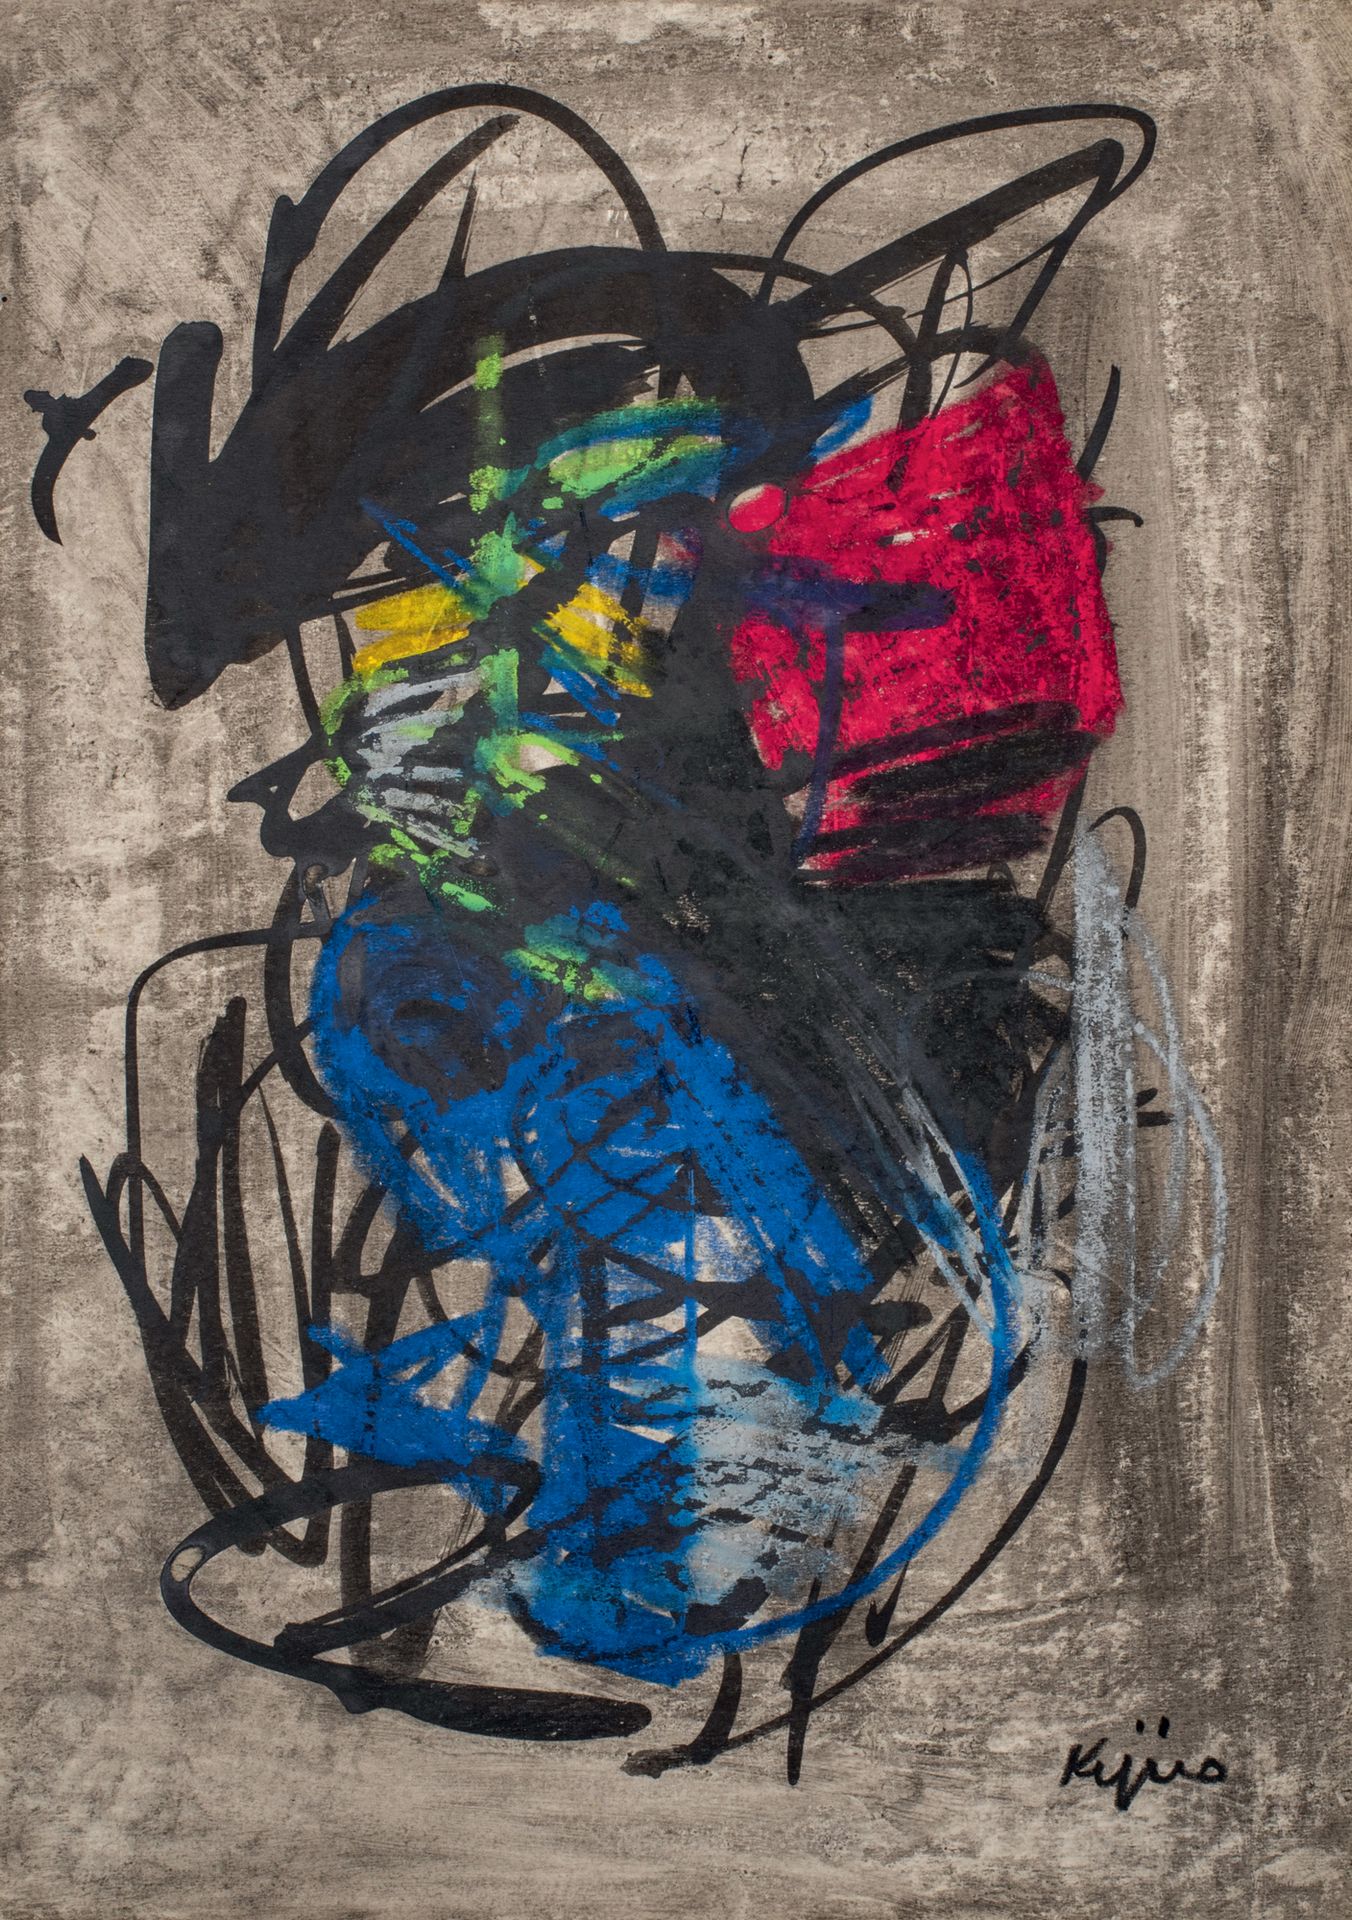 Ladislas KIJNO (1921-2012) 构图
纸上混合媒体（墨水、水粉和彩色铅笔），右下角签名 42.5 x 30.8 cm